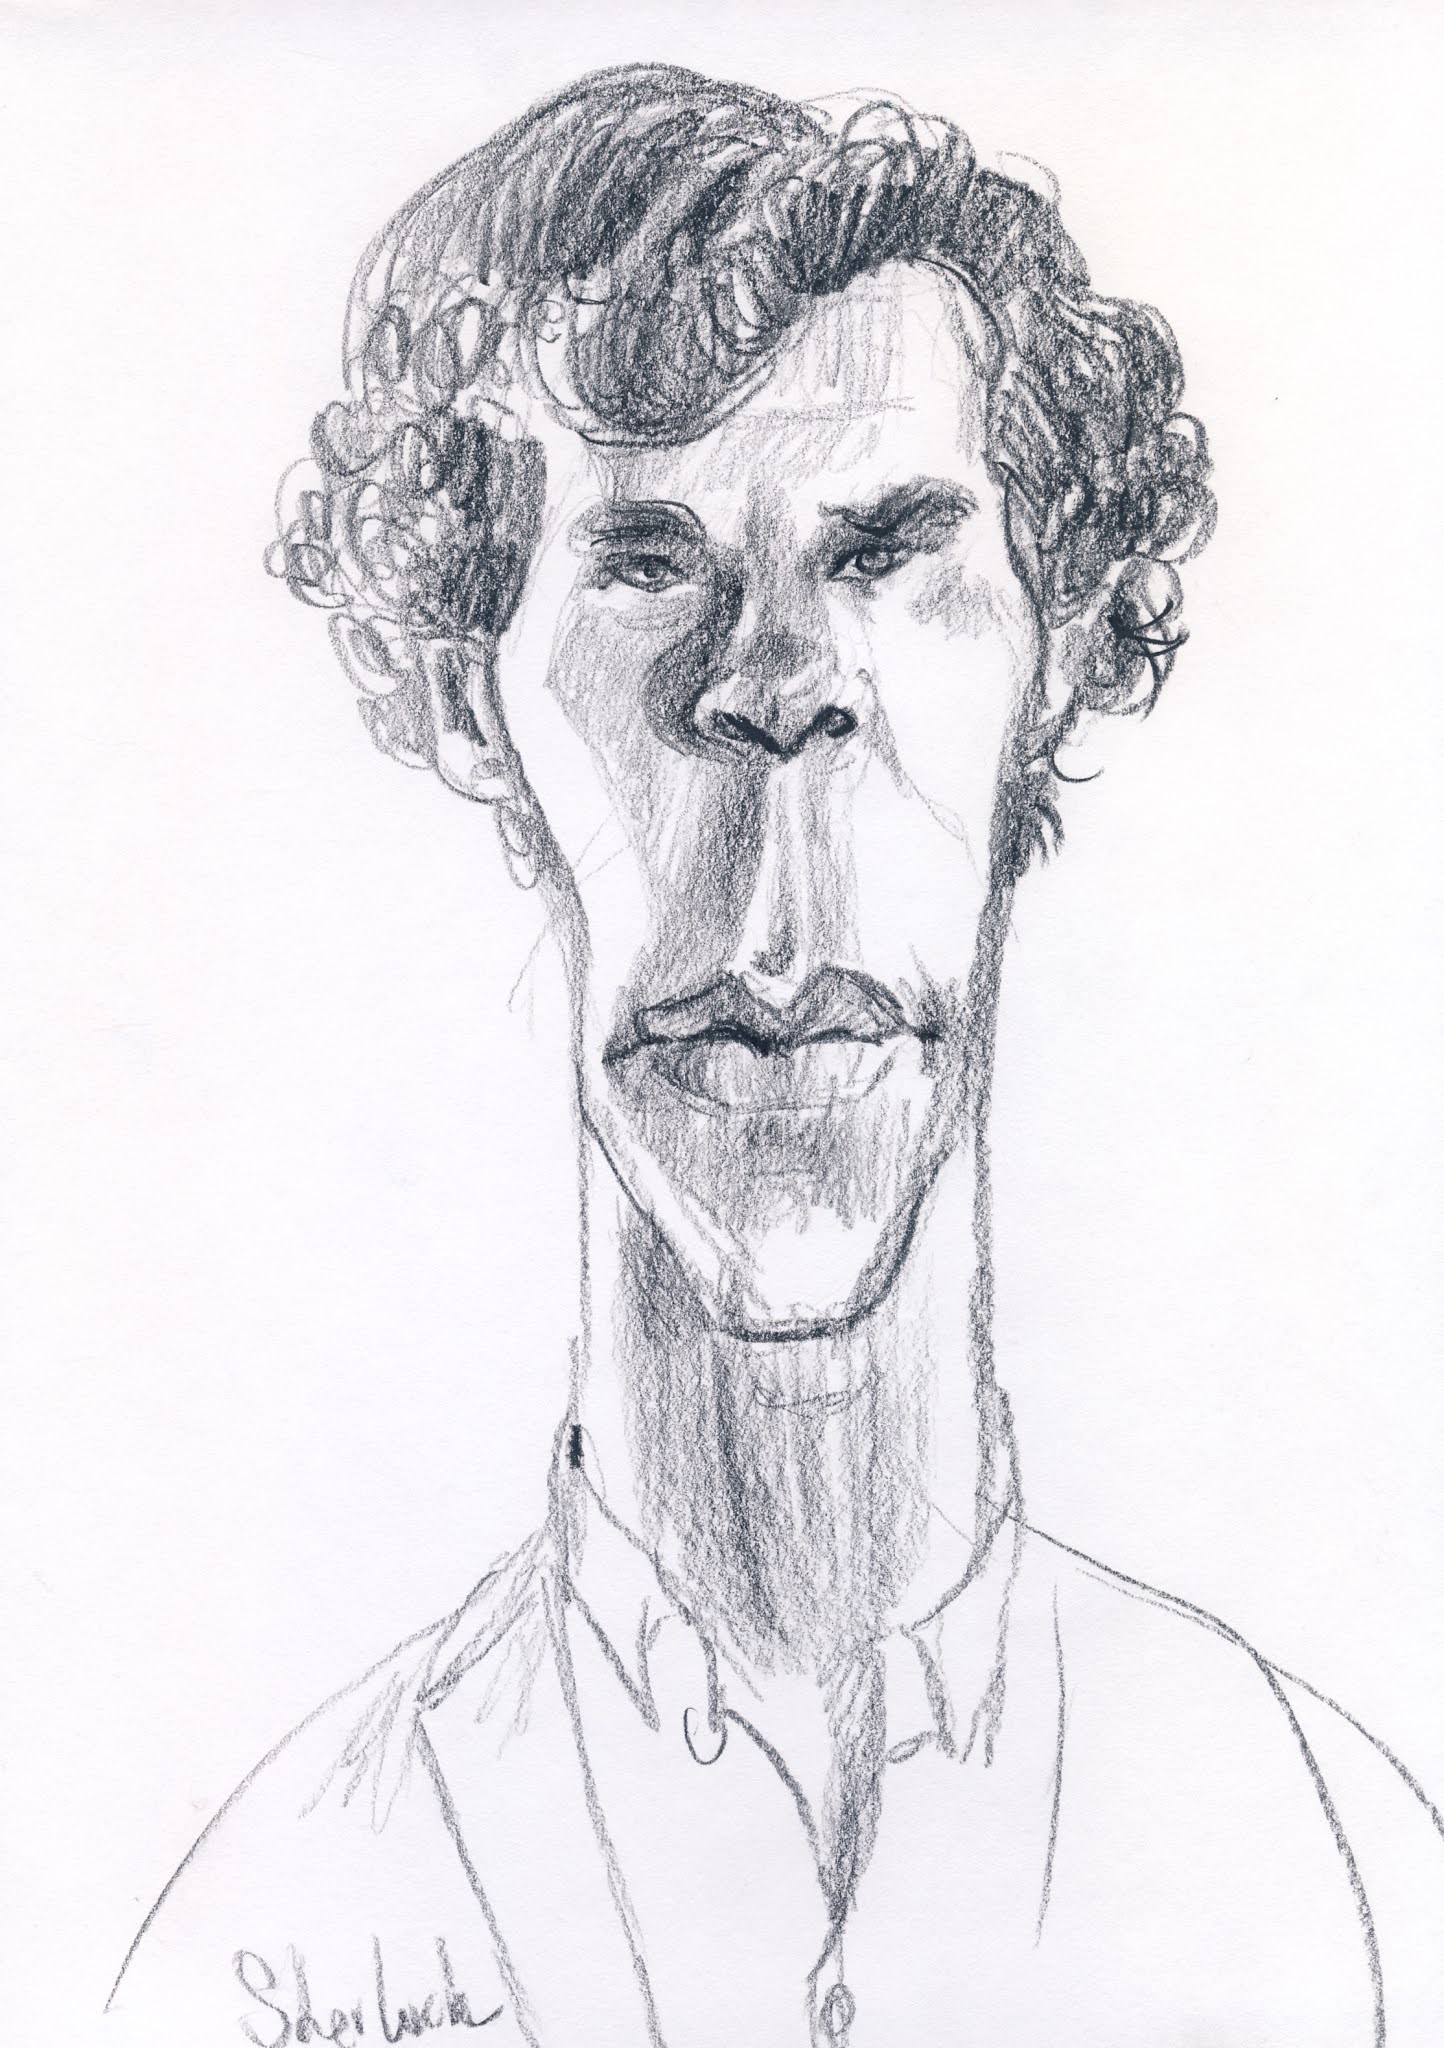 Benedict Cumberbatch as Sherlock Holmes by BowieKelly on DeviantArt